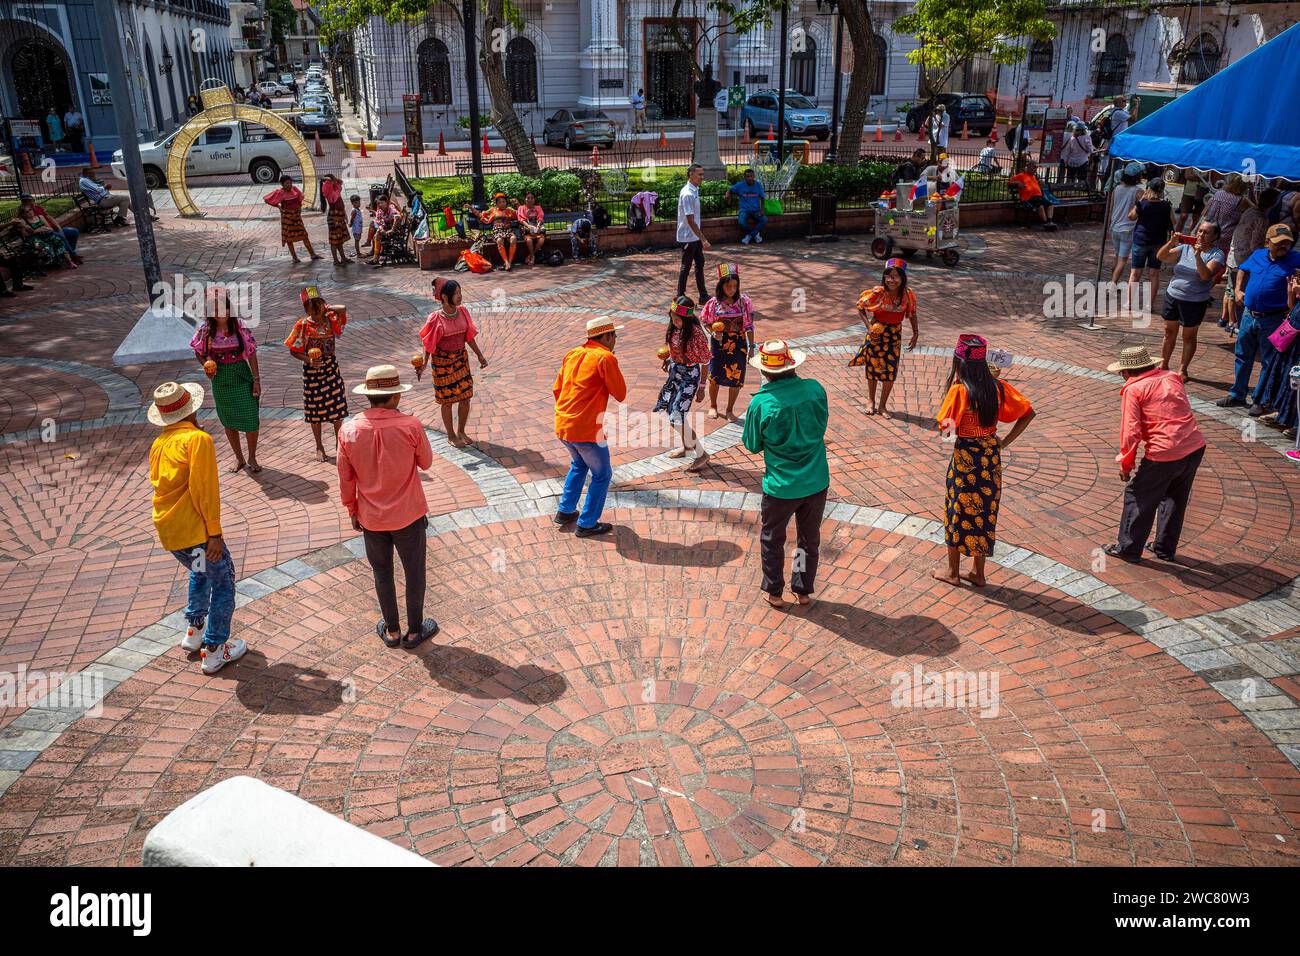 Traditioneller Tanz auf dem Cathedral plaza im alten casco viejo Panama City Stockfoto